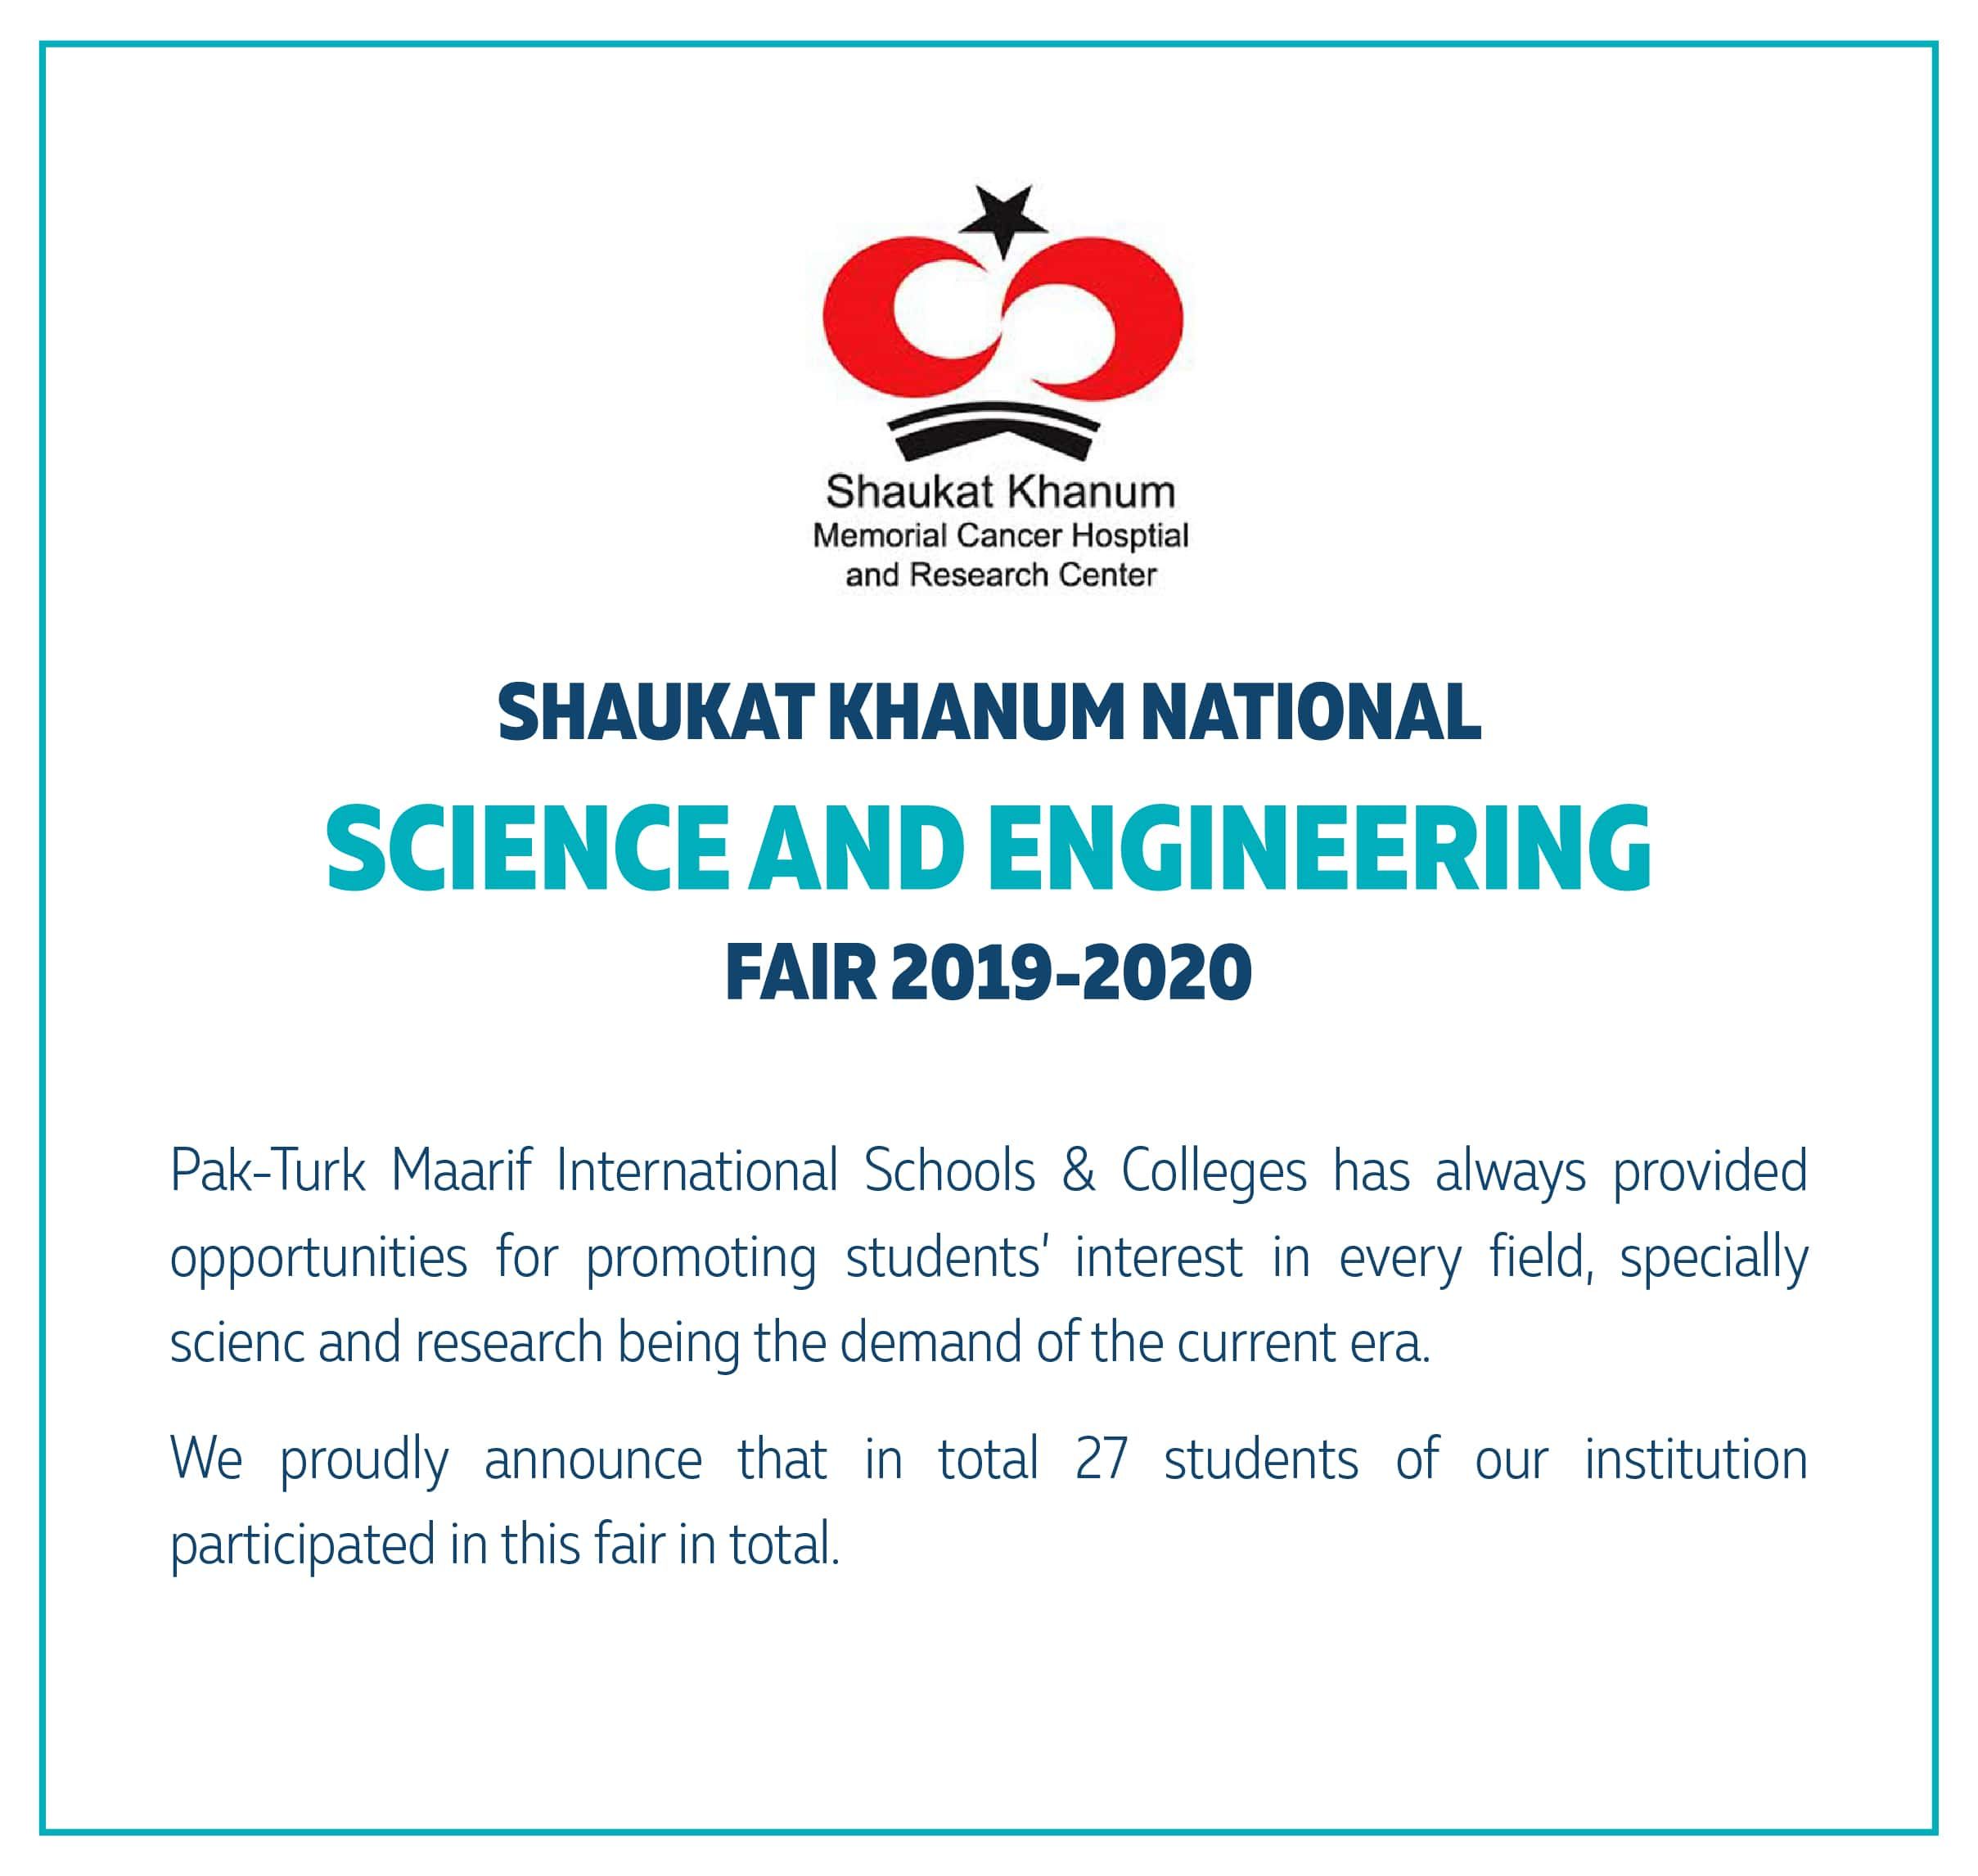 SHAUKAT KHANUM NATIONAL SCIENCE AND ENGINEERING FAIR 2019-2020